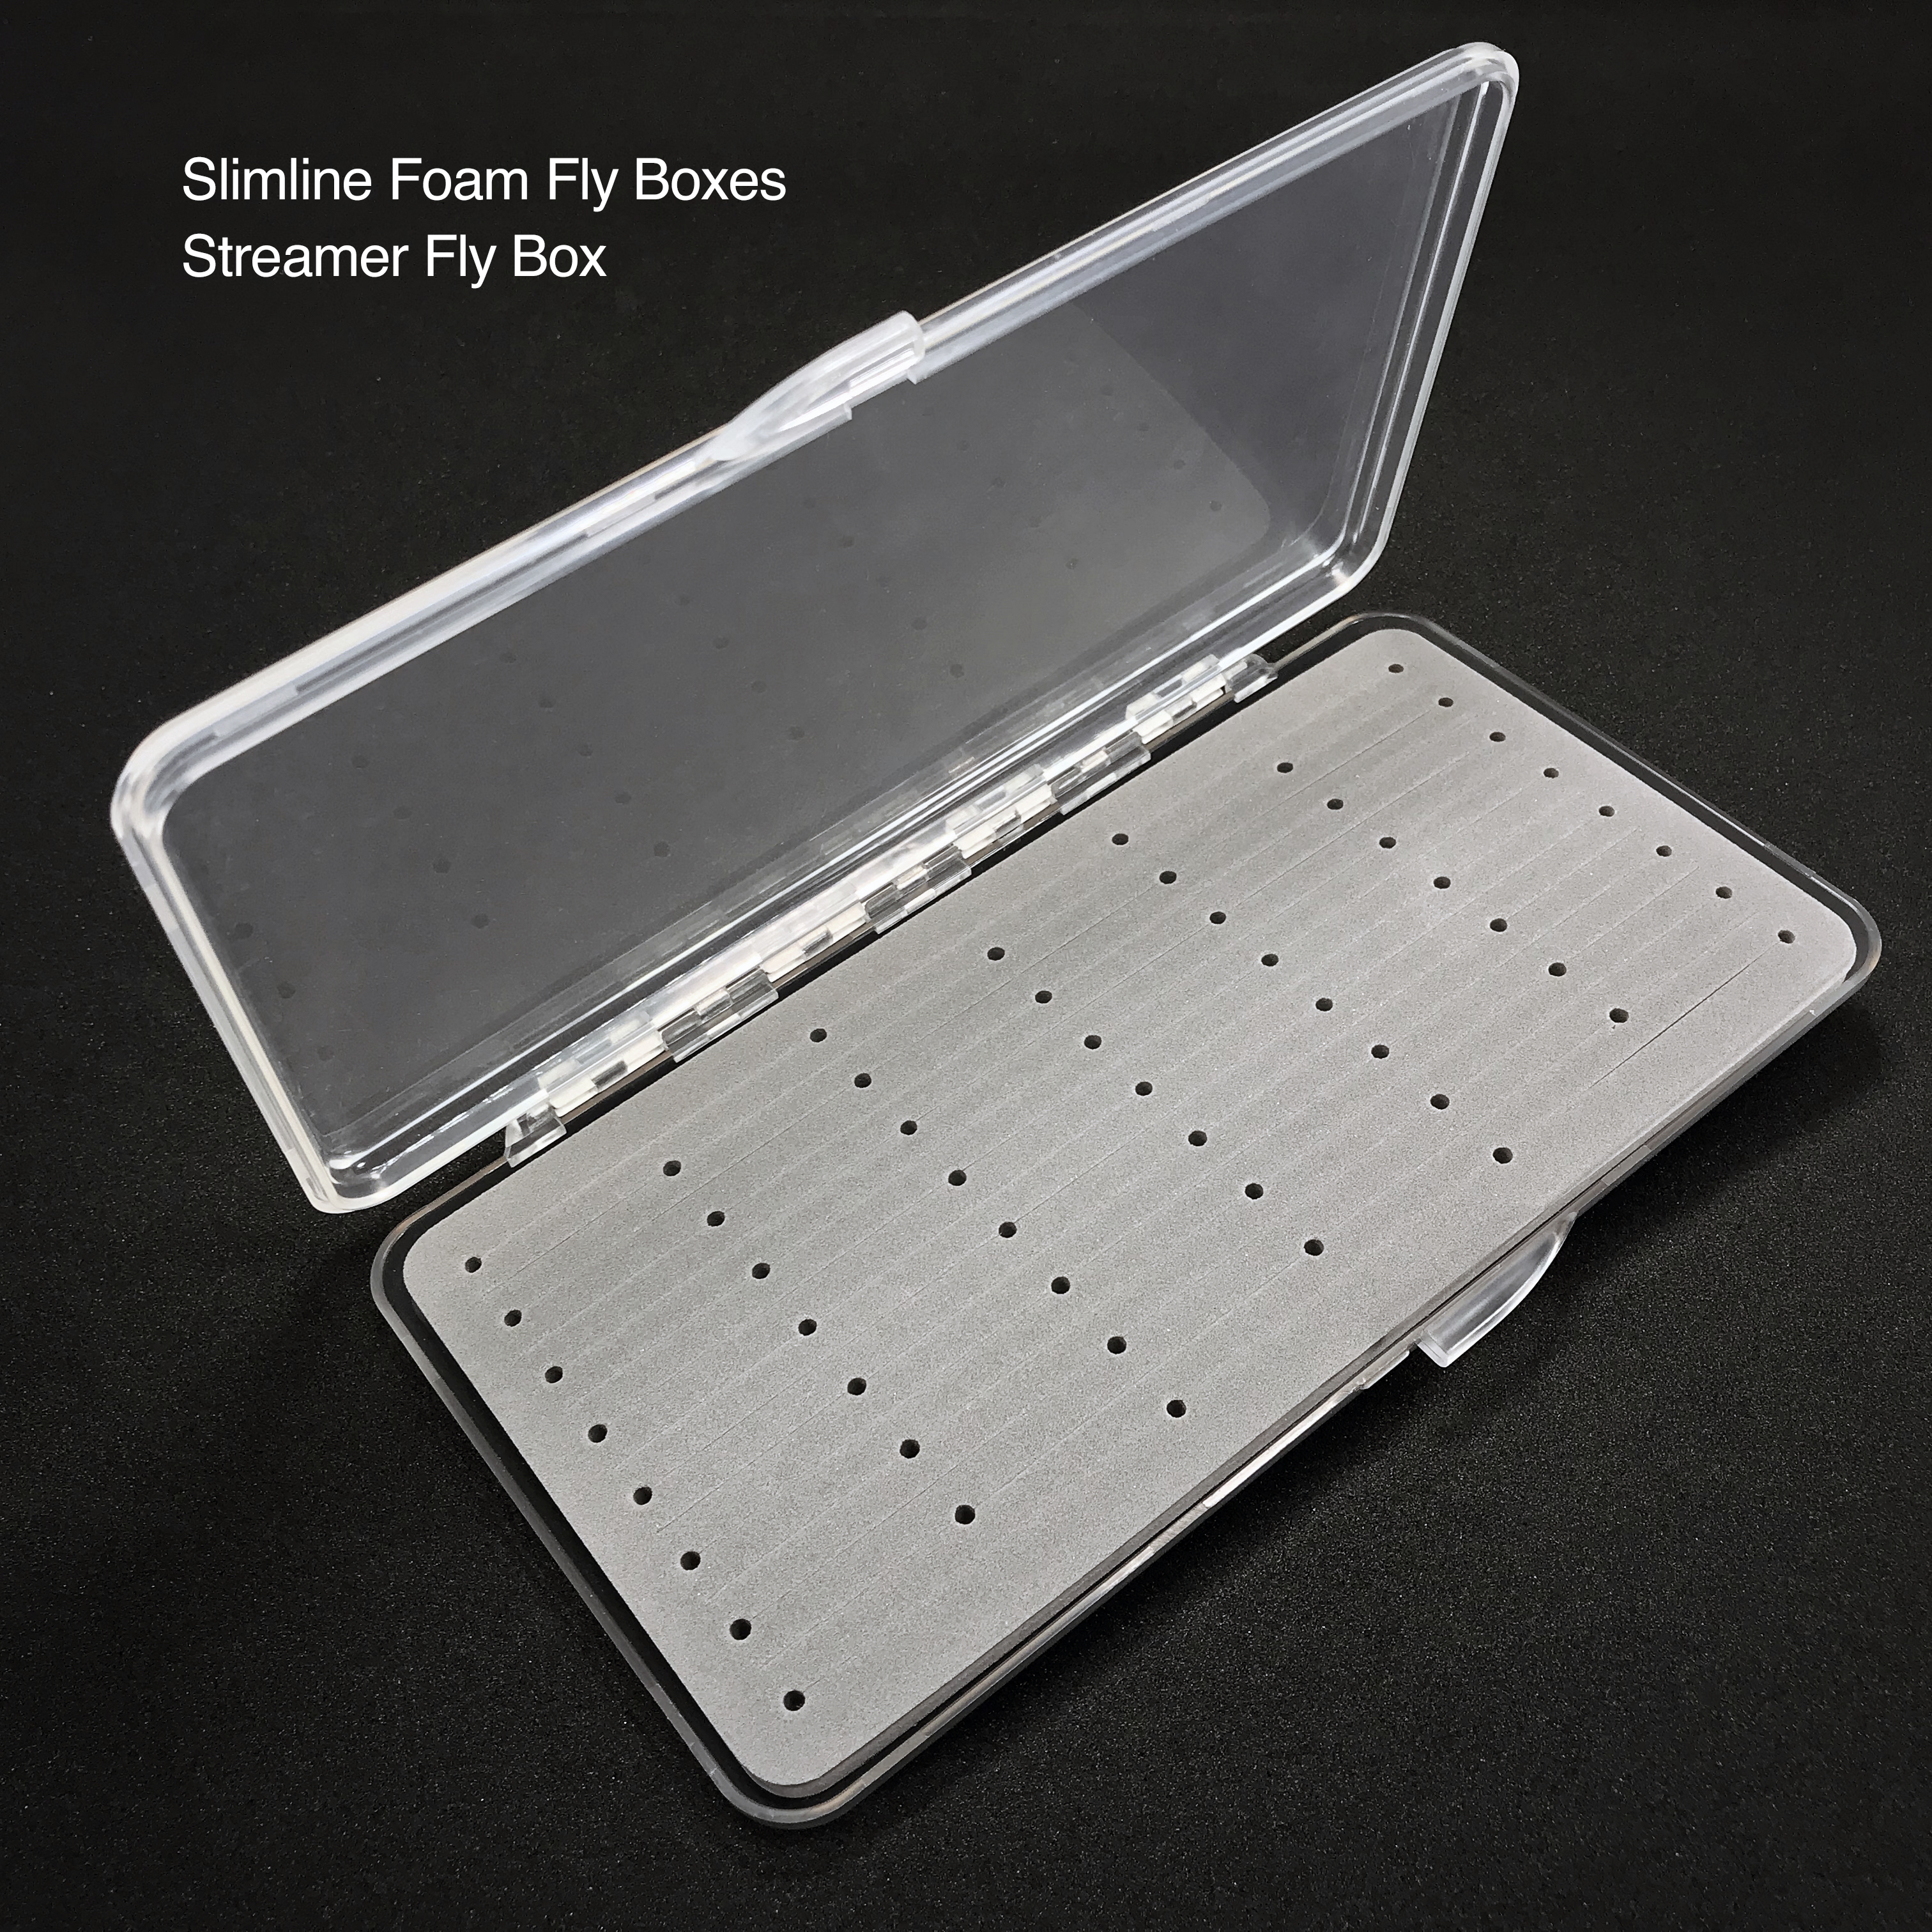 Stillwater Slimline Foam Fly boxes: Streamer Fly Box